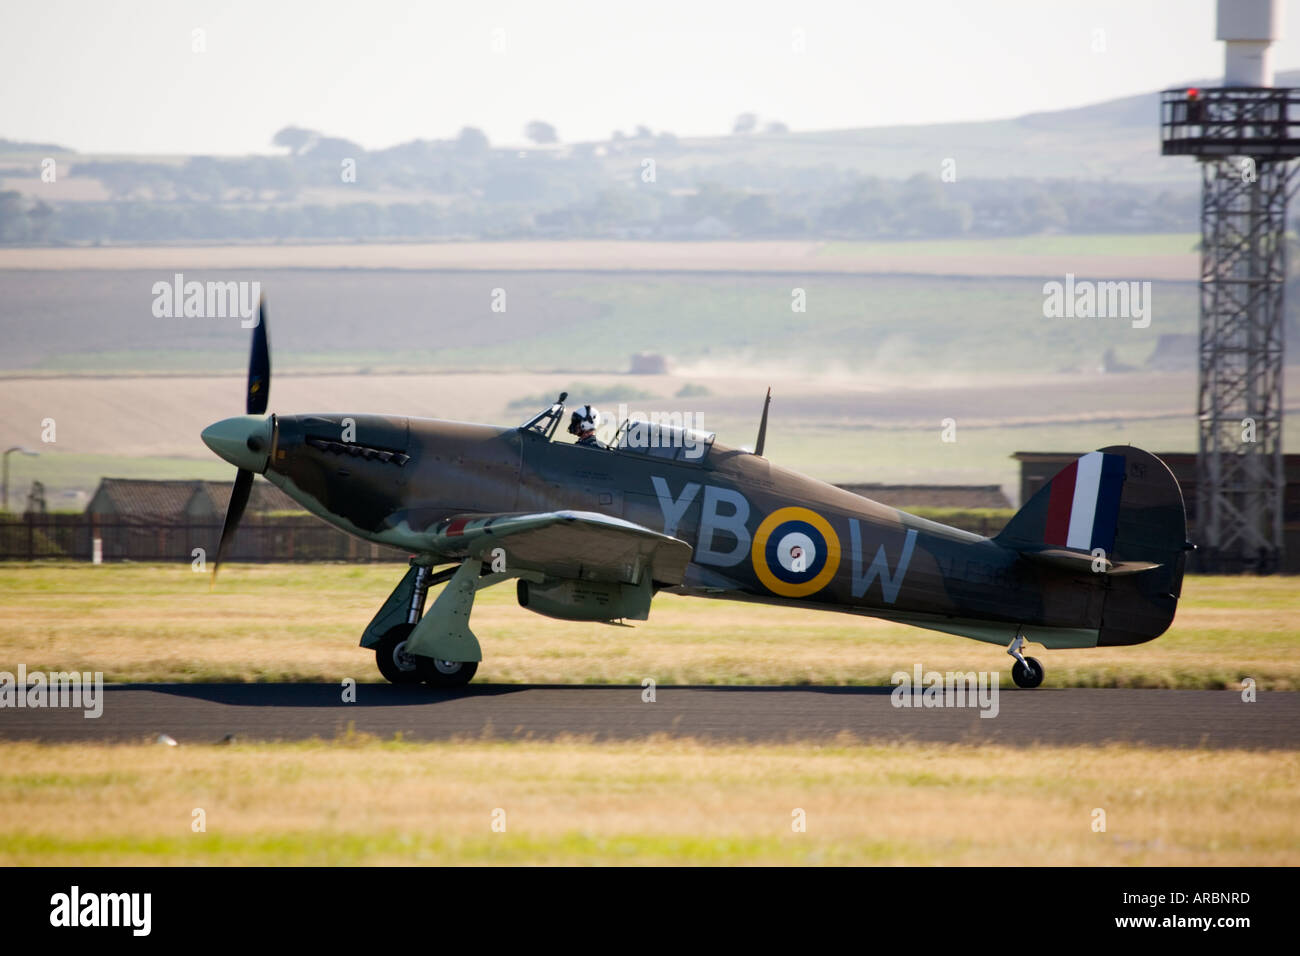 Battle of Britain Memorial Flight RAF Spitfire Fighter on runway Stock Photo